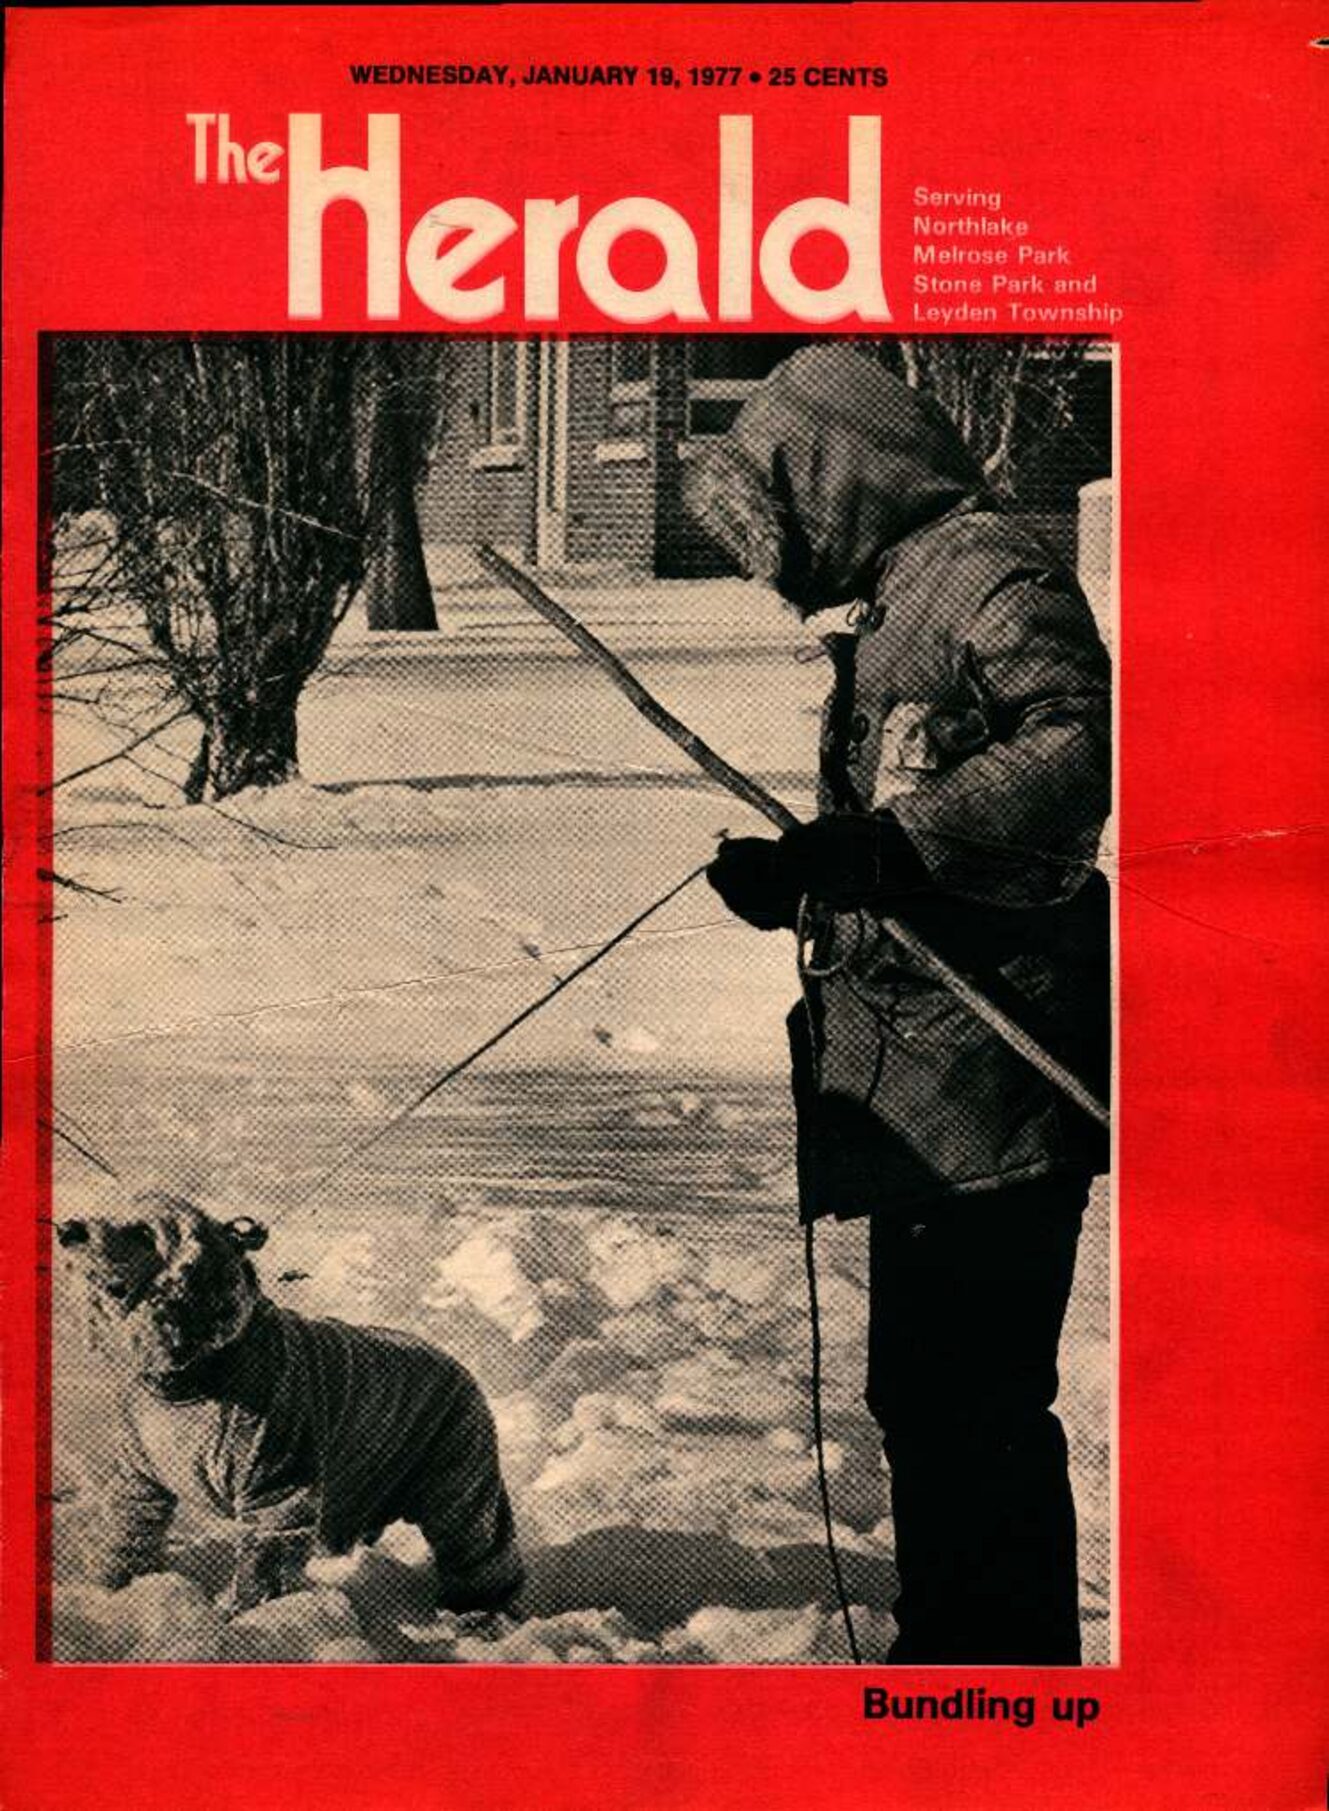 The Herald – 19770119